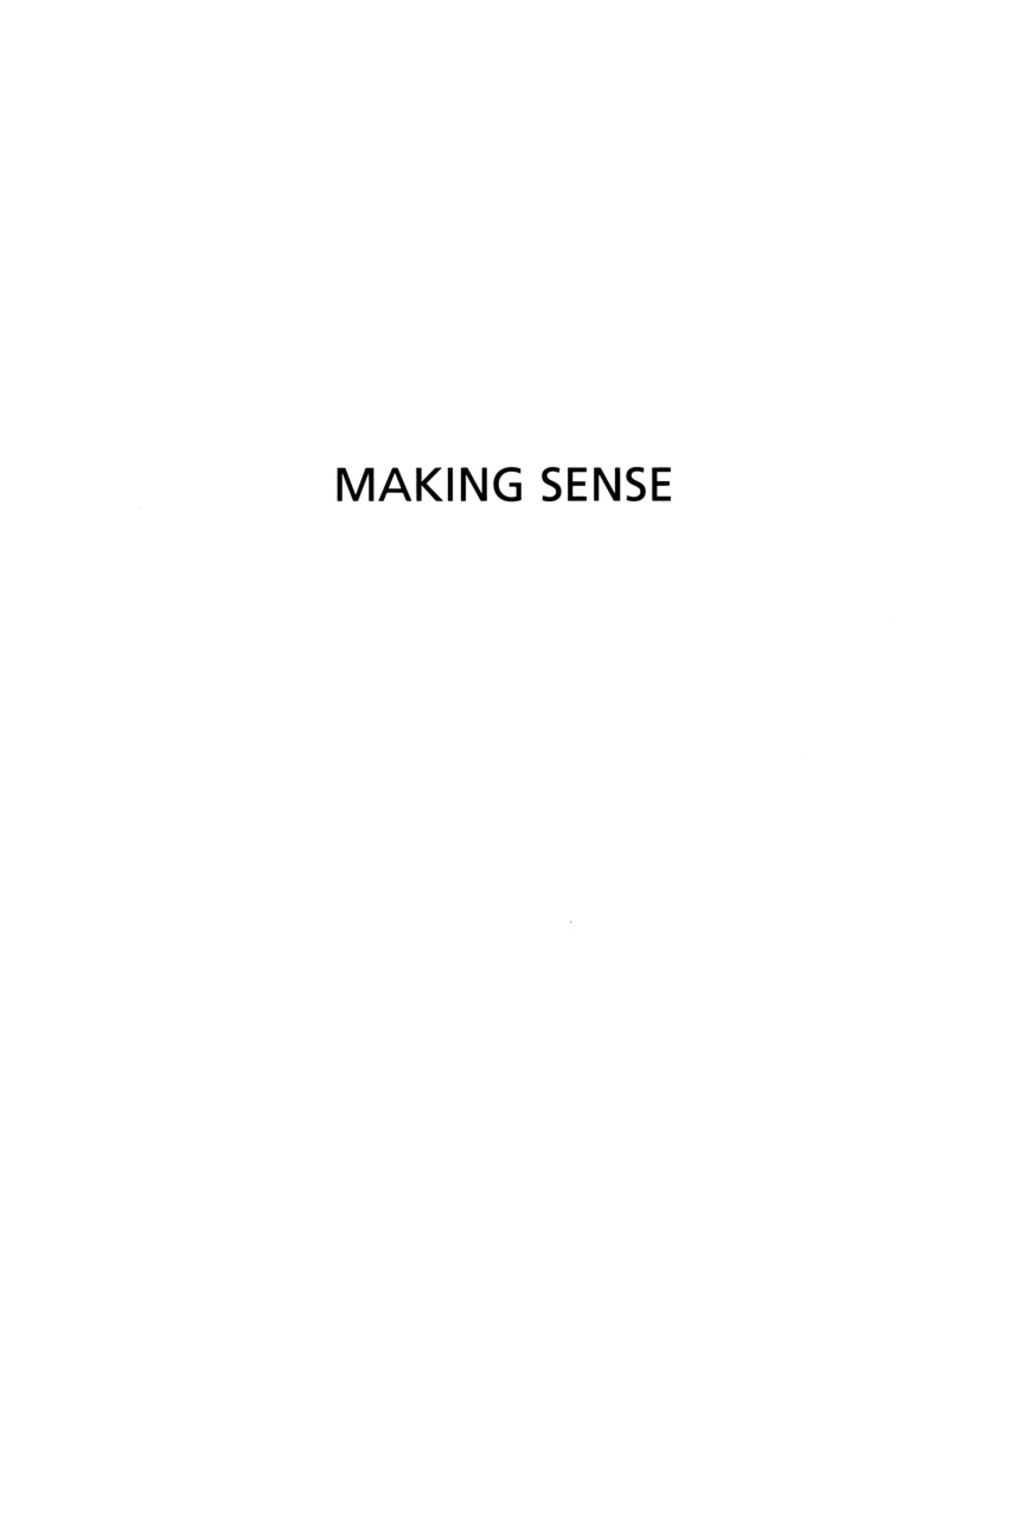 Making Sense (eBook) - Paul Thom